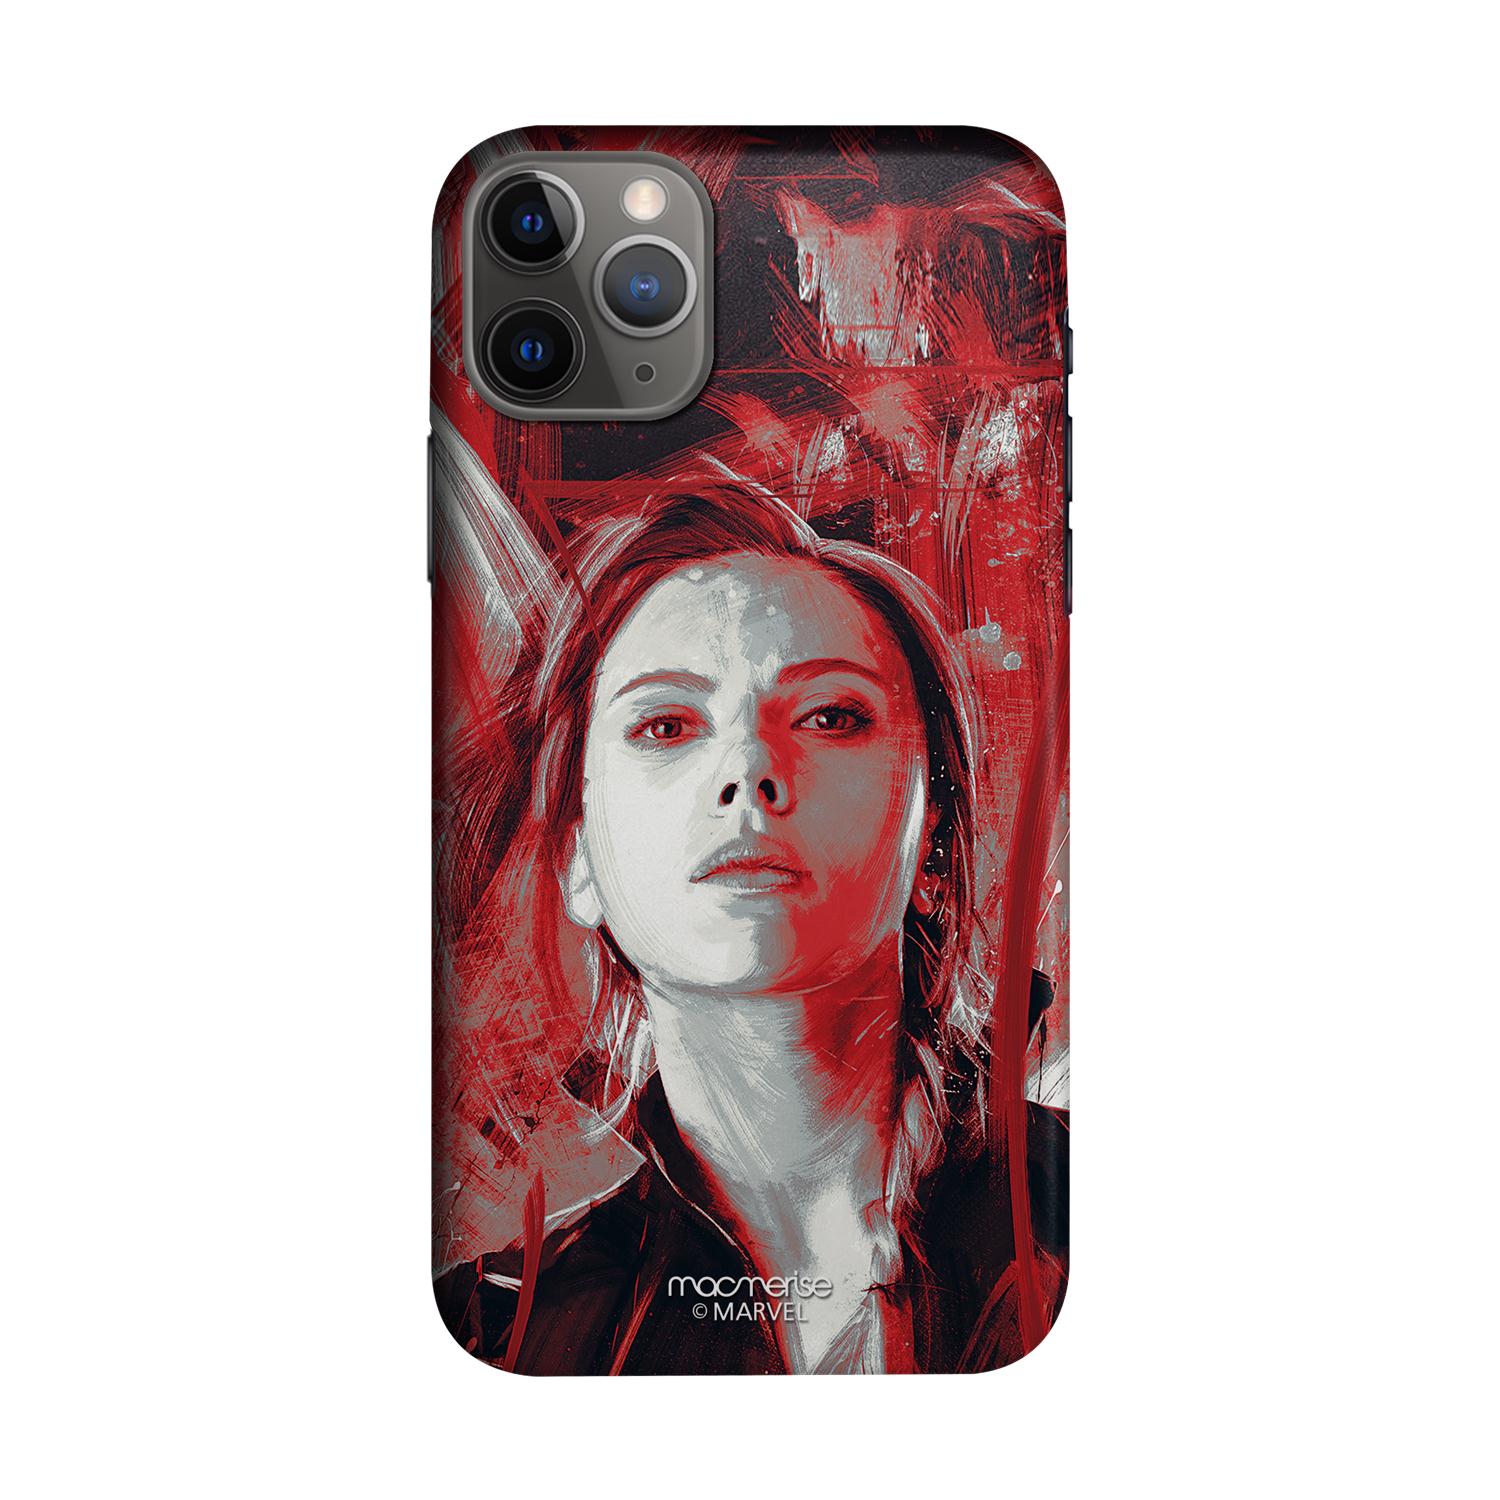 Buy Charcoal Art Black Widow - Sleek Phone Case for iPhone 11 Pro Max Online